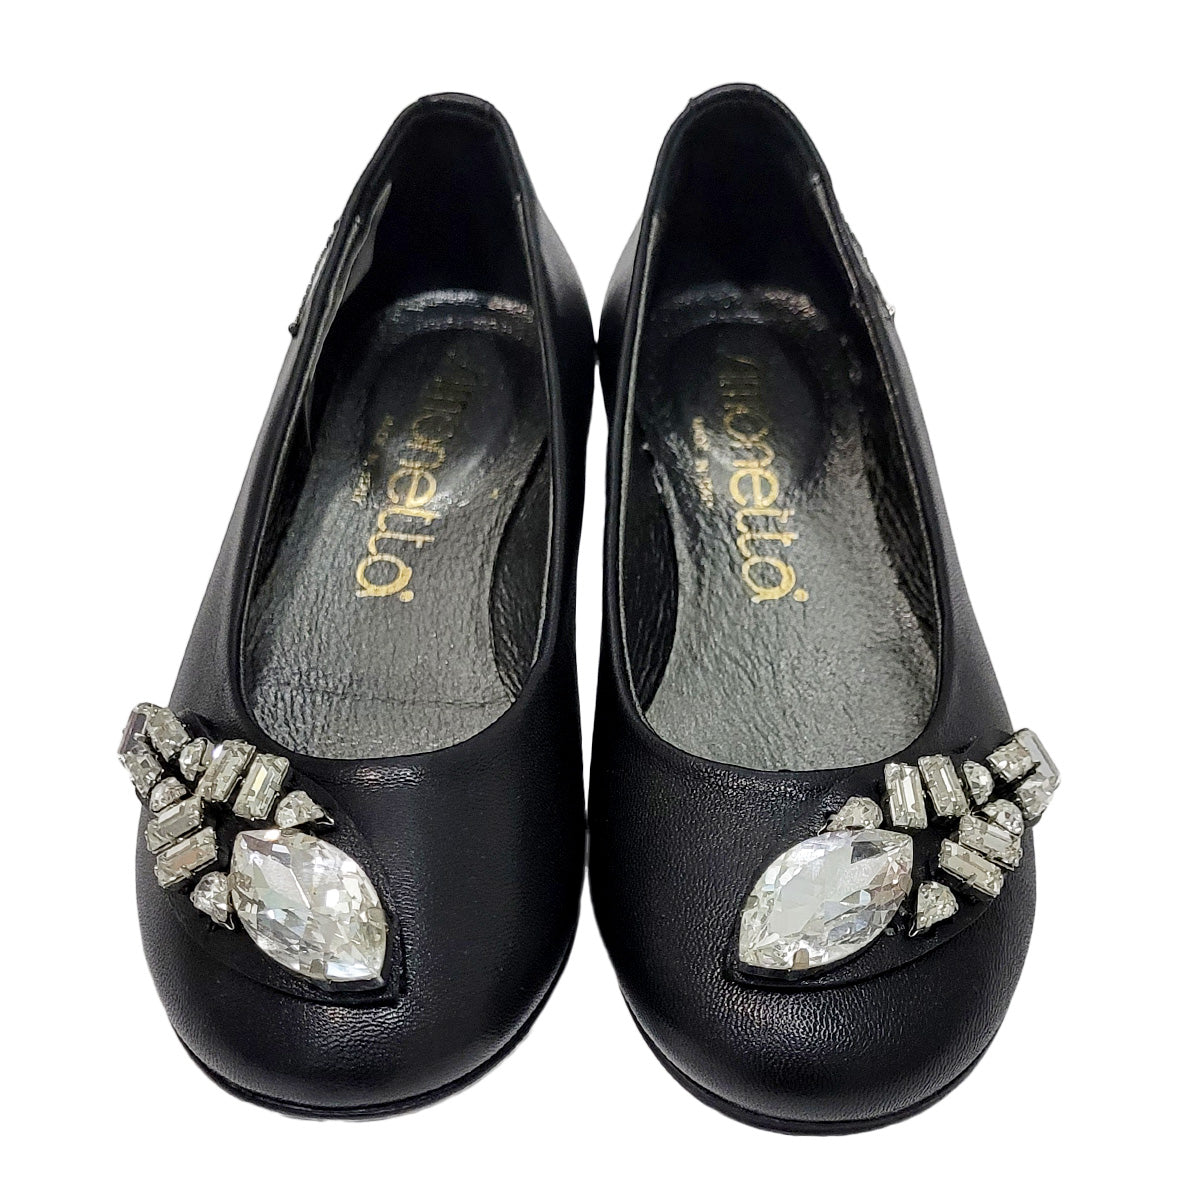 Simonetta Glove Black Shoe